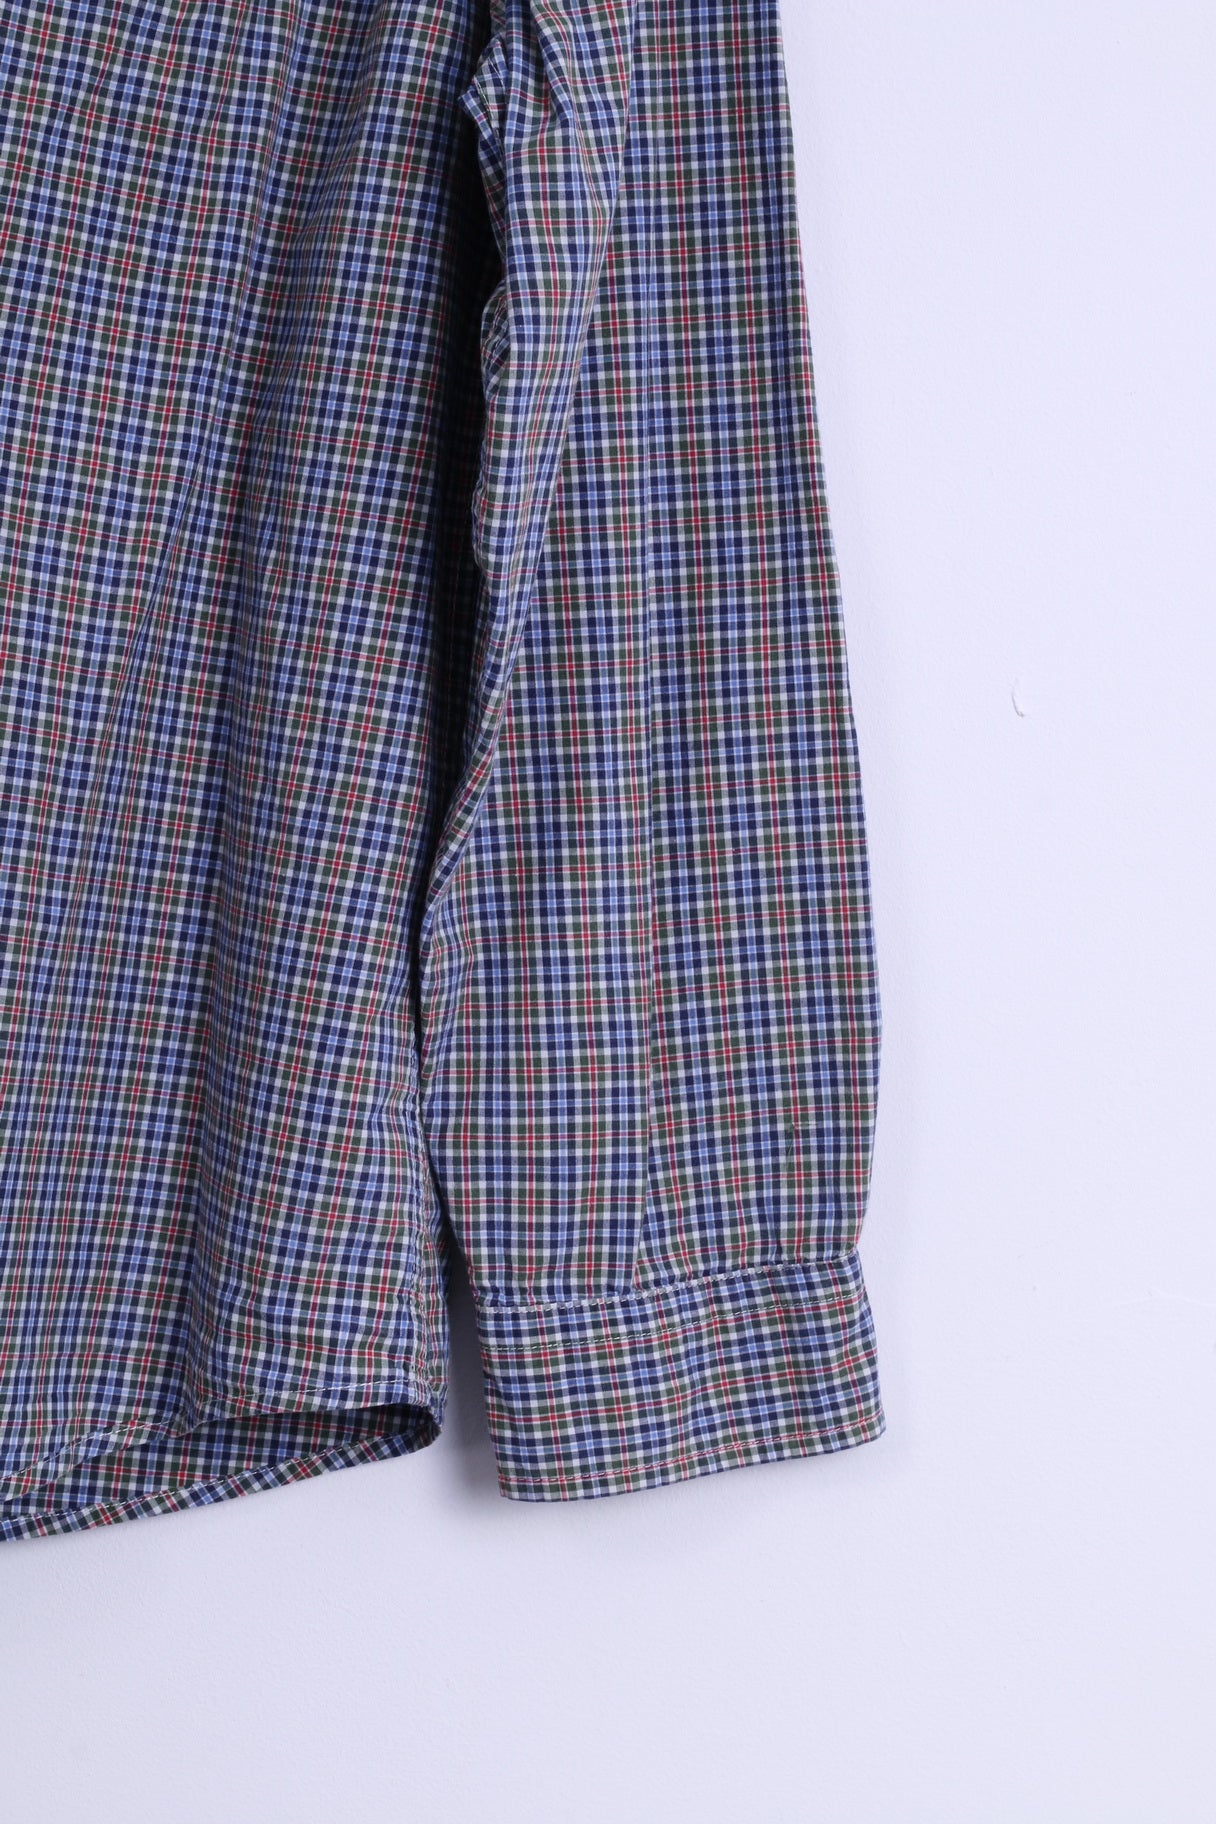 GAP Mens XL Casual Shirt Cotton Blue Checkered Classic Fit Long Sleeve